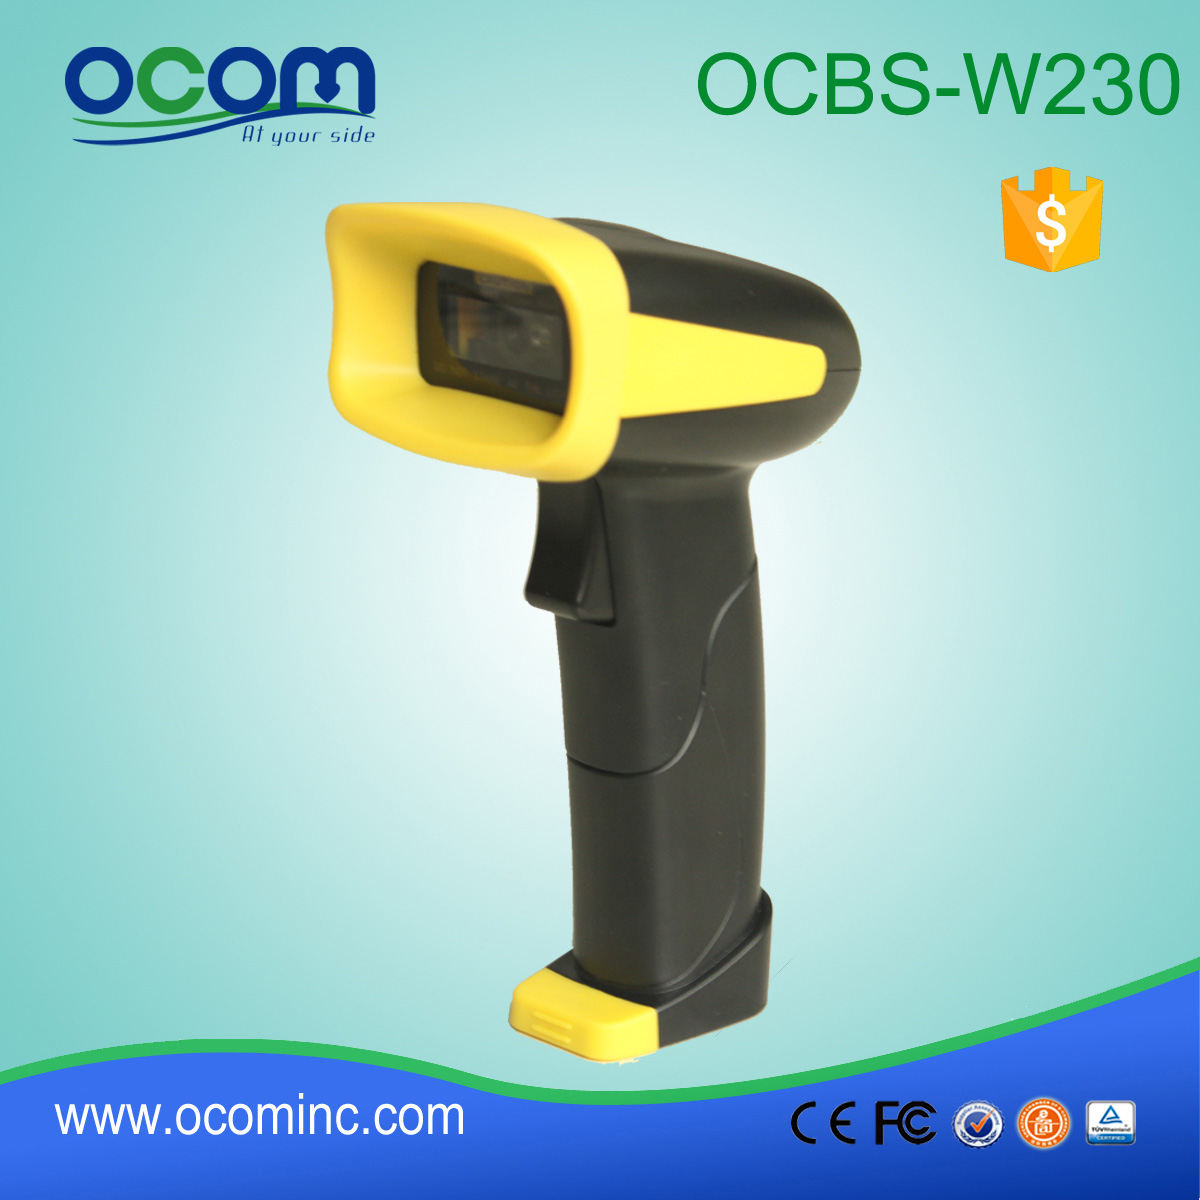 OCBs-W230 Longa Distância 1D / 2D / QR Supermercado Barcode Scanner